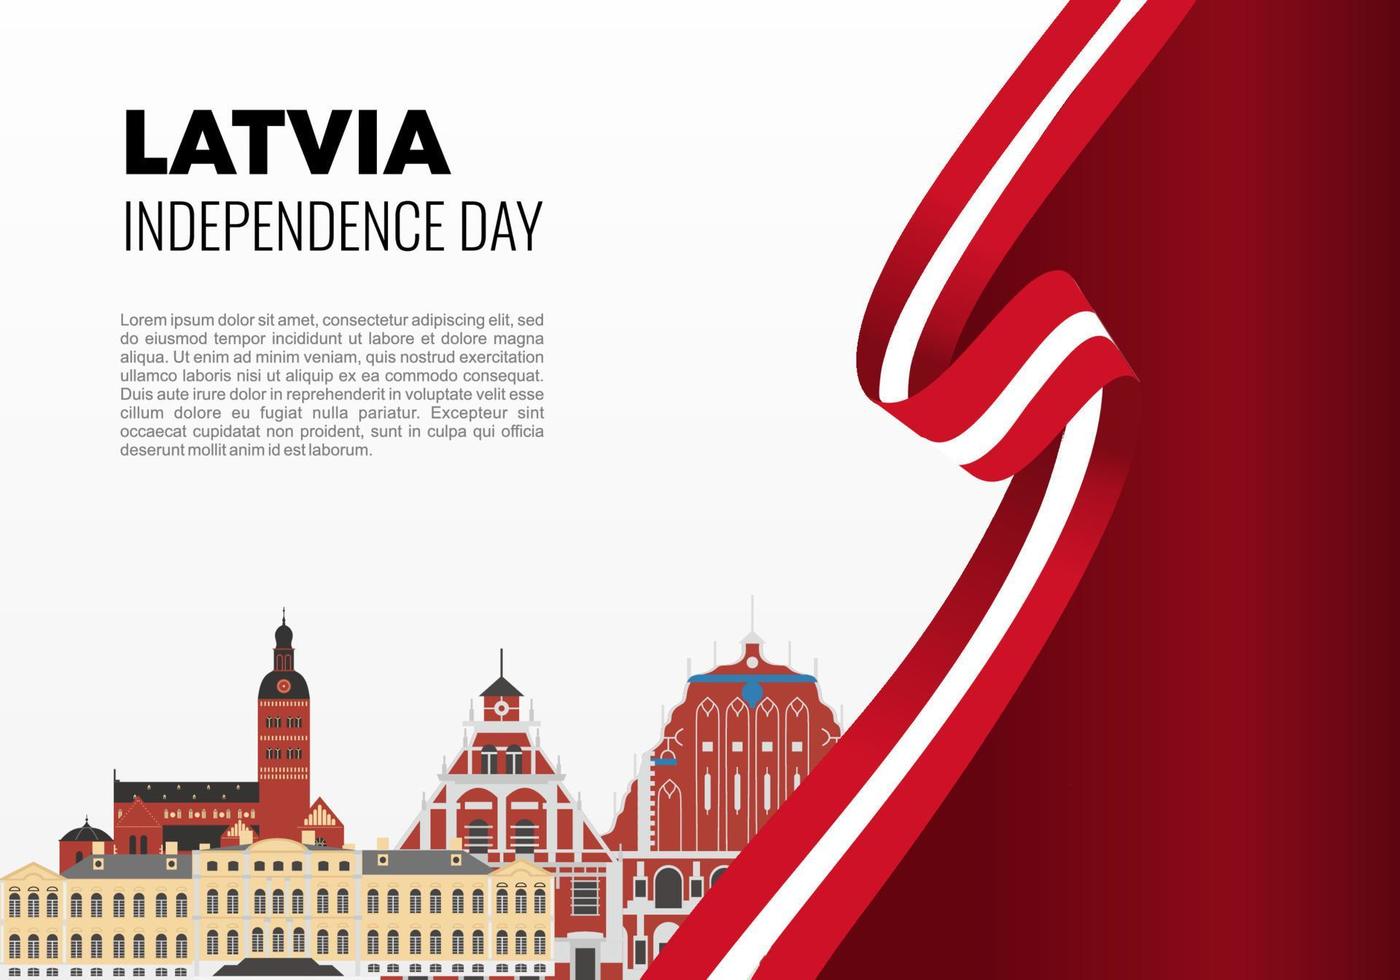 Latvia independence day background poster for national celebration. vector